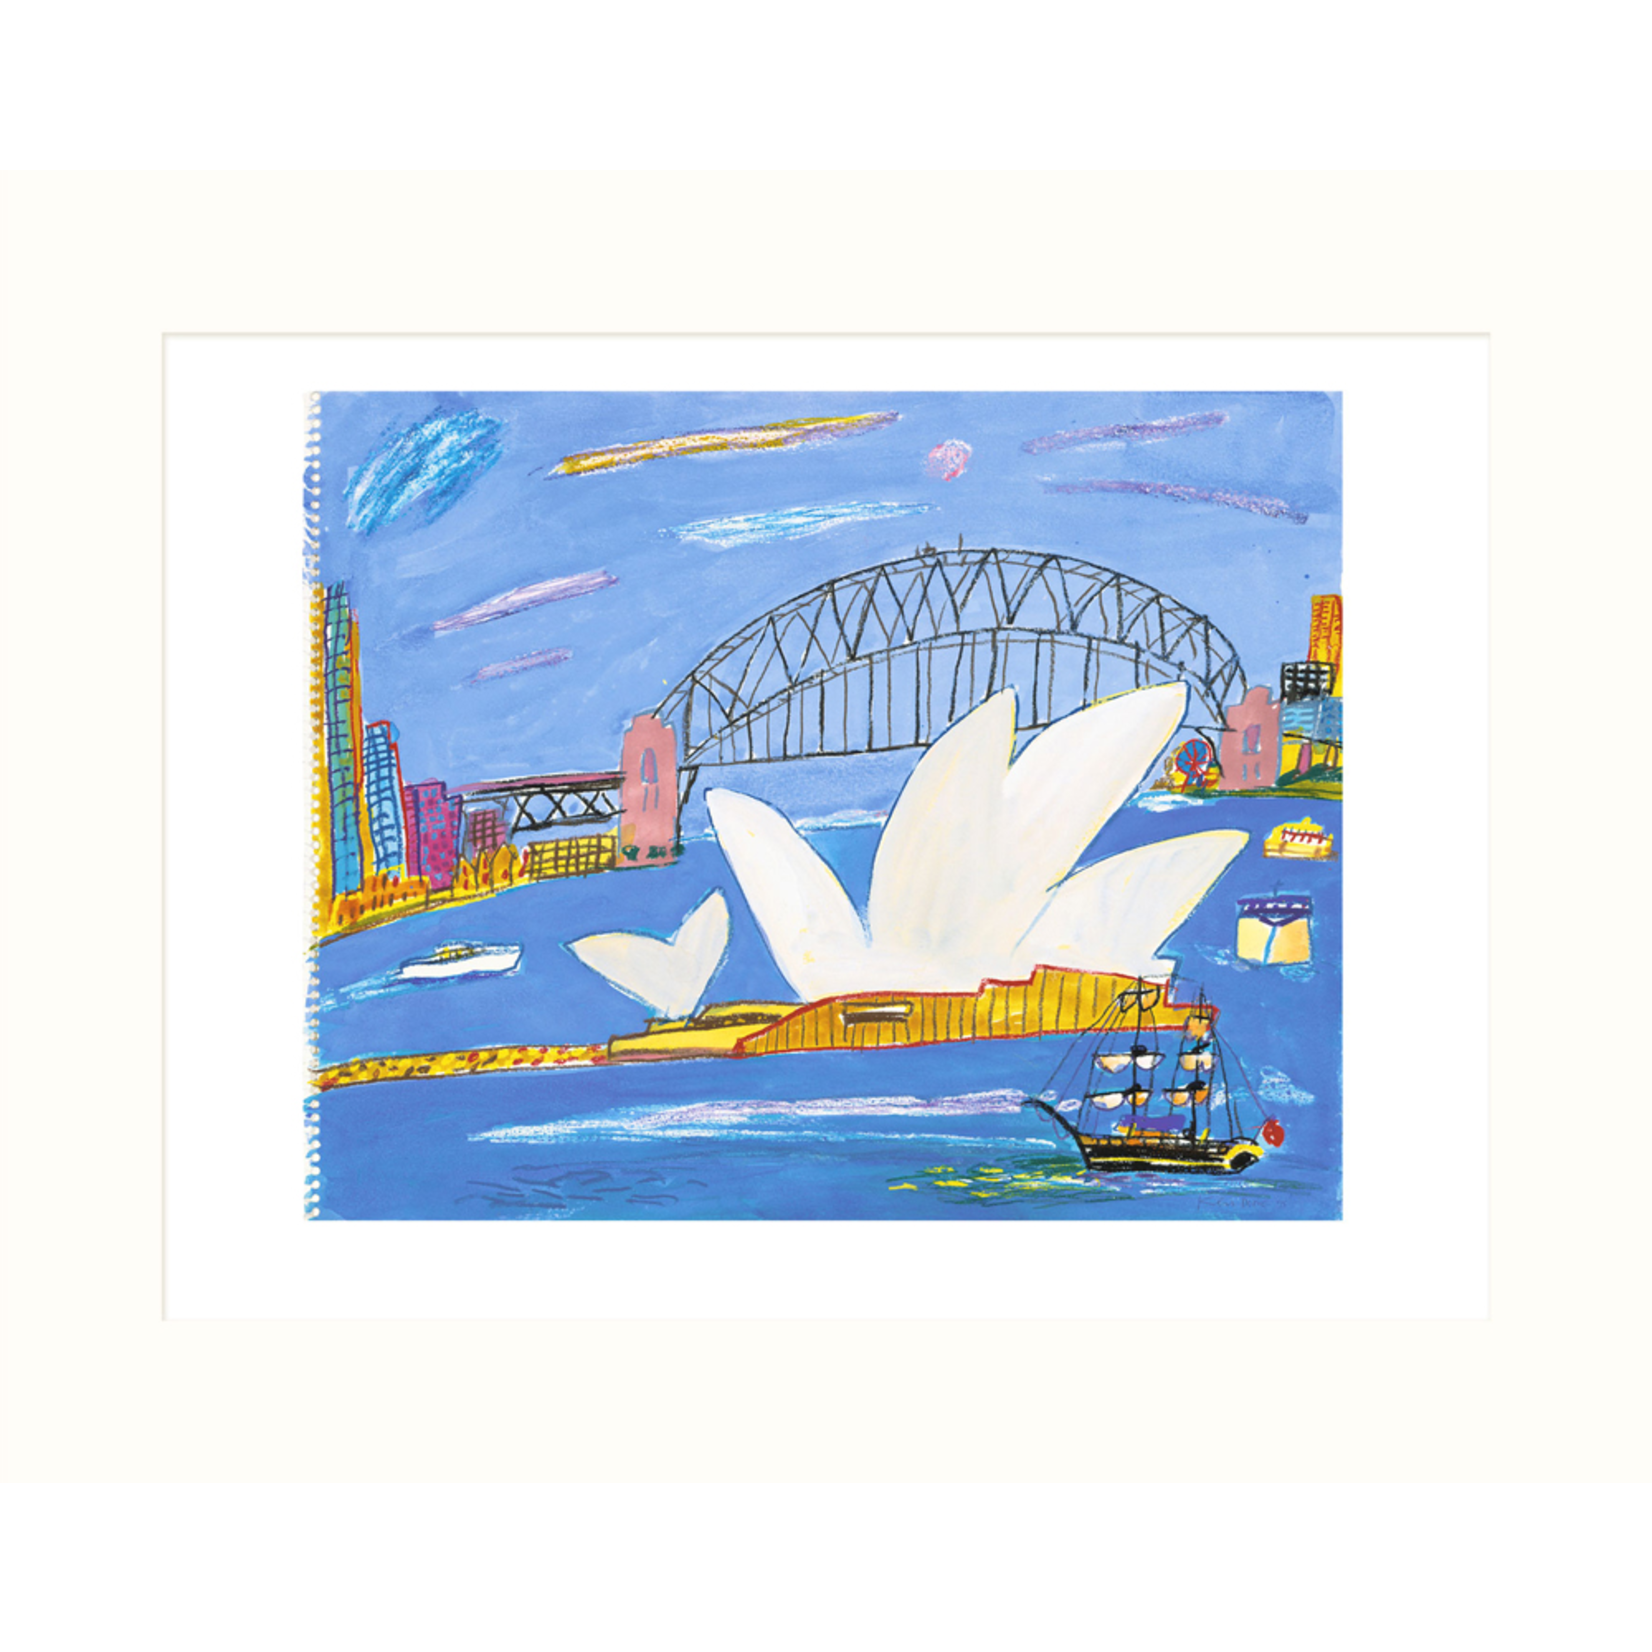 Limited Edition Prints Bridge and Opera House, sailing ship, 1995